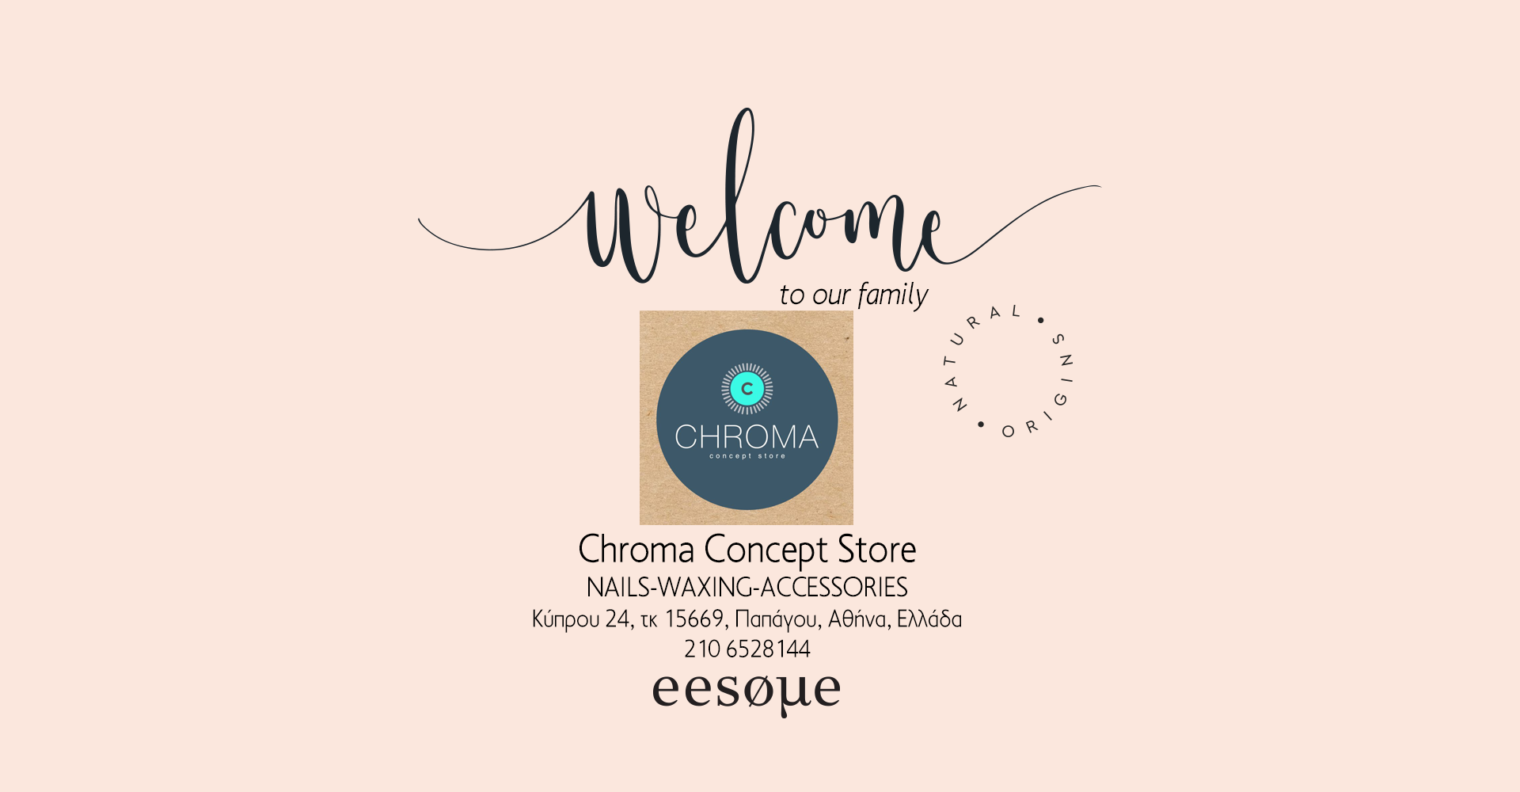 Chroma Concept Store